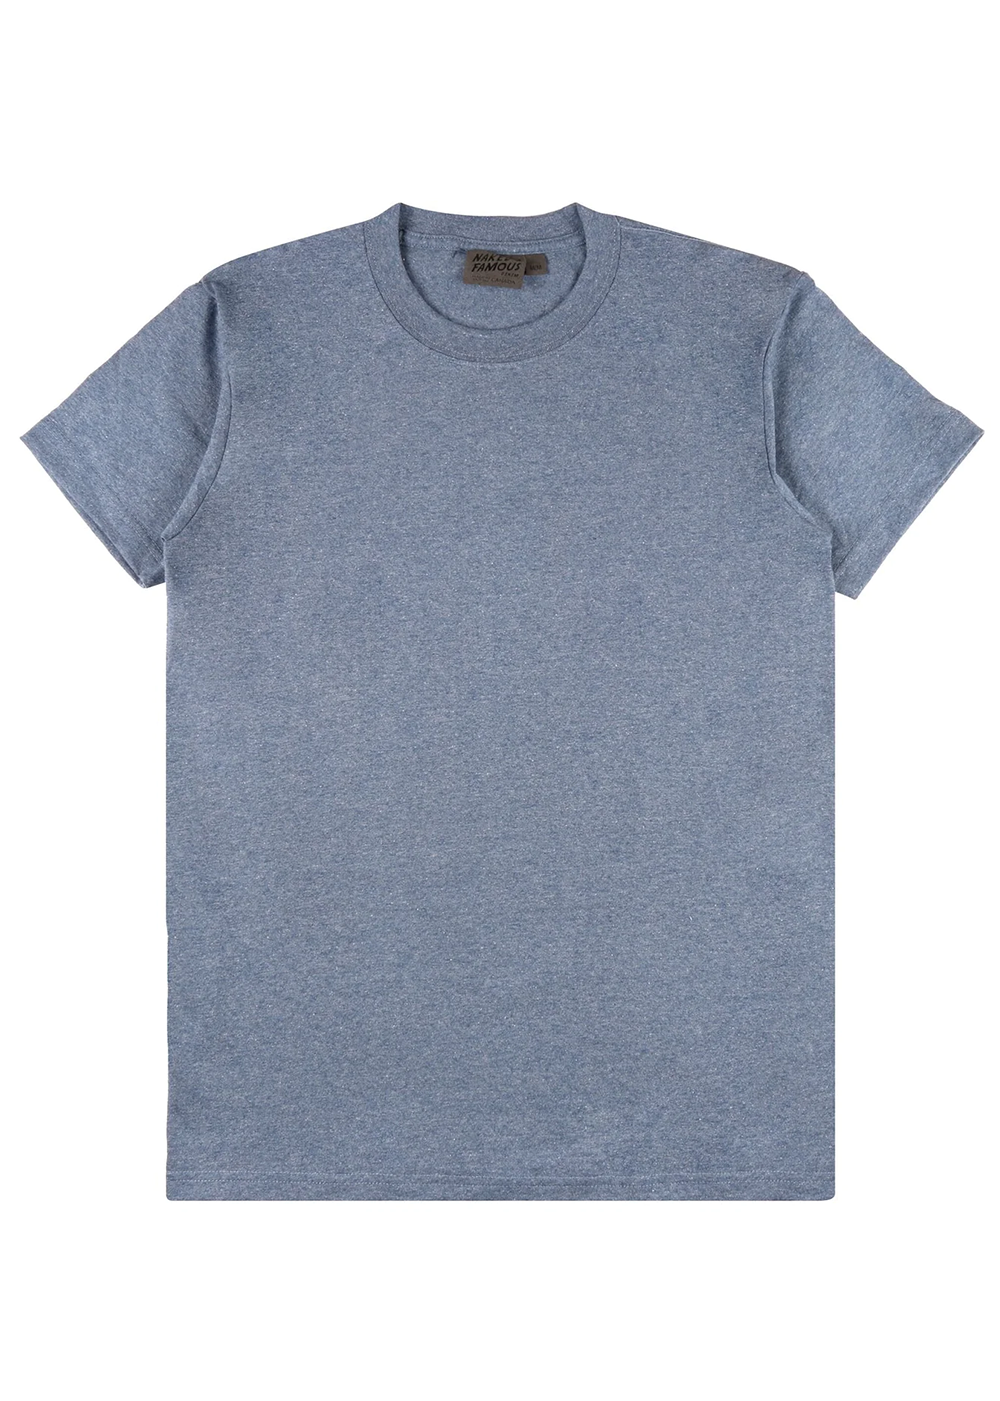 Circular Knit T-Shirt - Blue - Naked and Famous Denim Canada - Danali